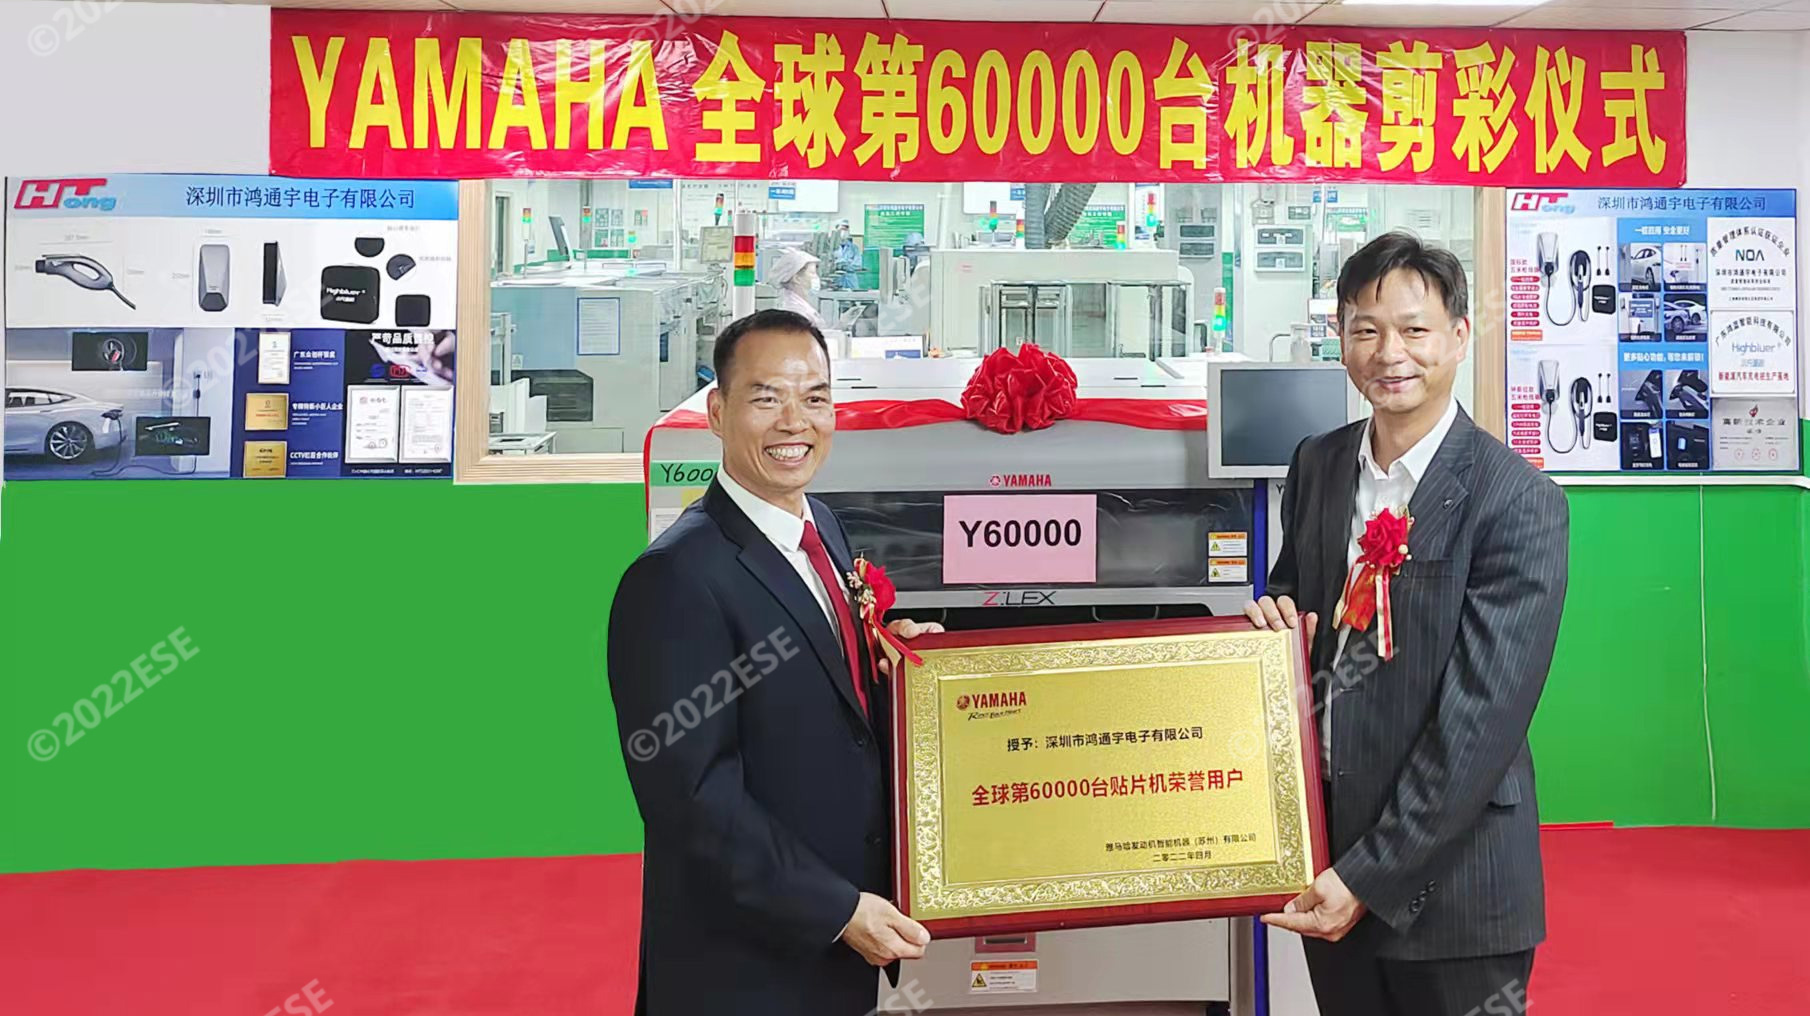 YAMAHA全球第60000台贴片机剪彩仪式隆重举行